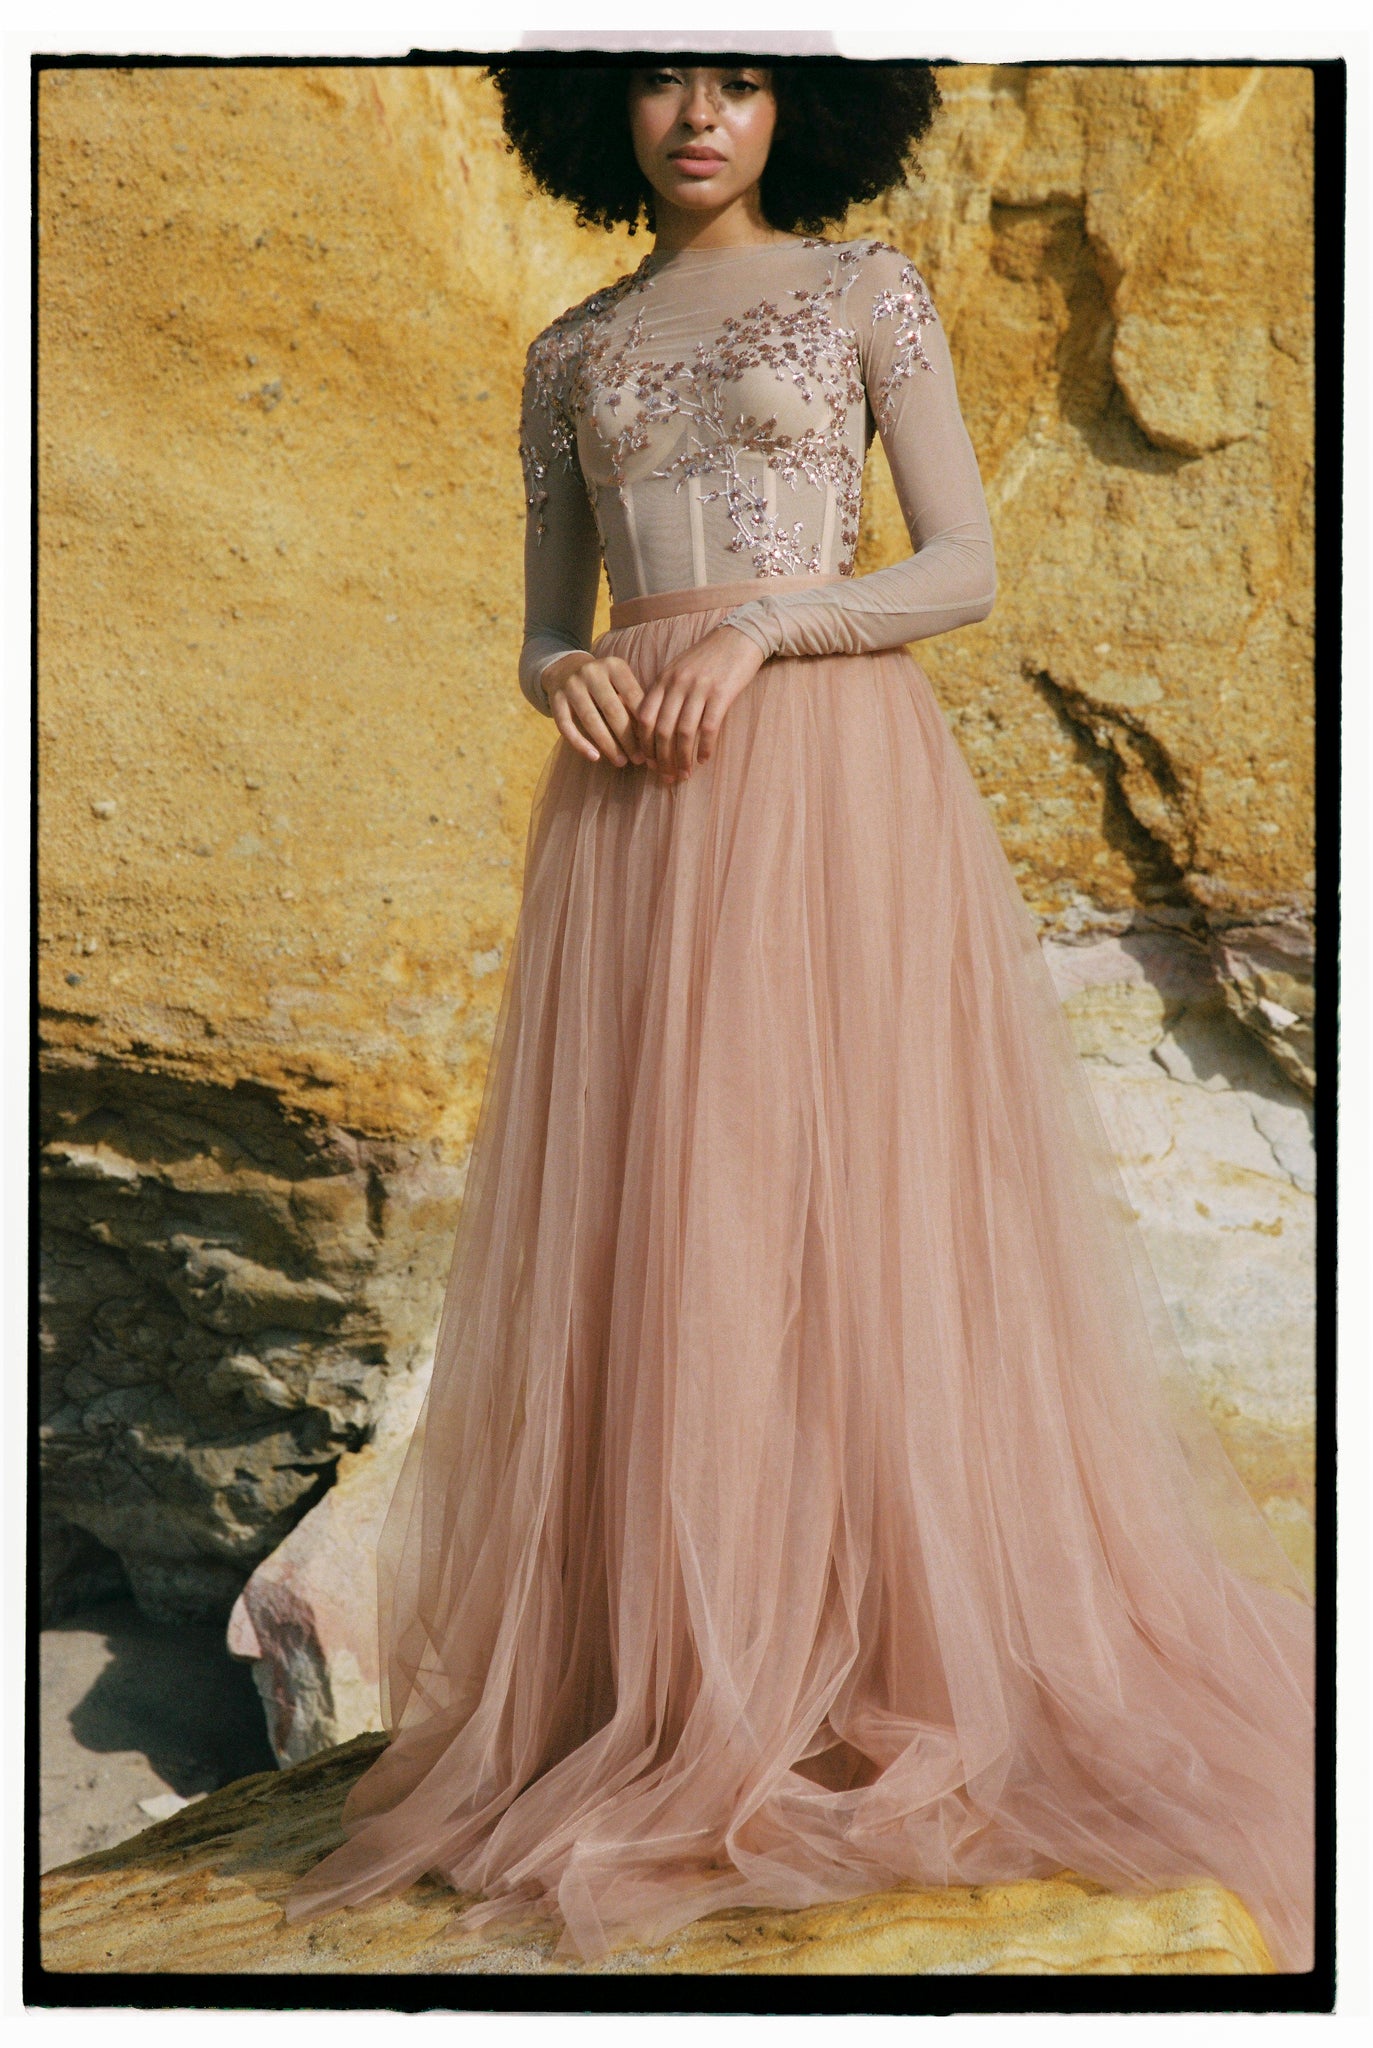 Copper Gold Tulle Wedding Dress 6 US / Pale Copper / Beige